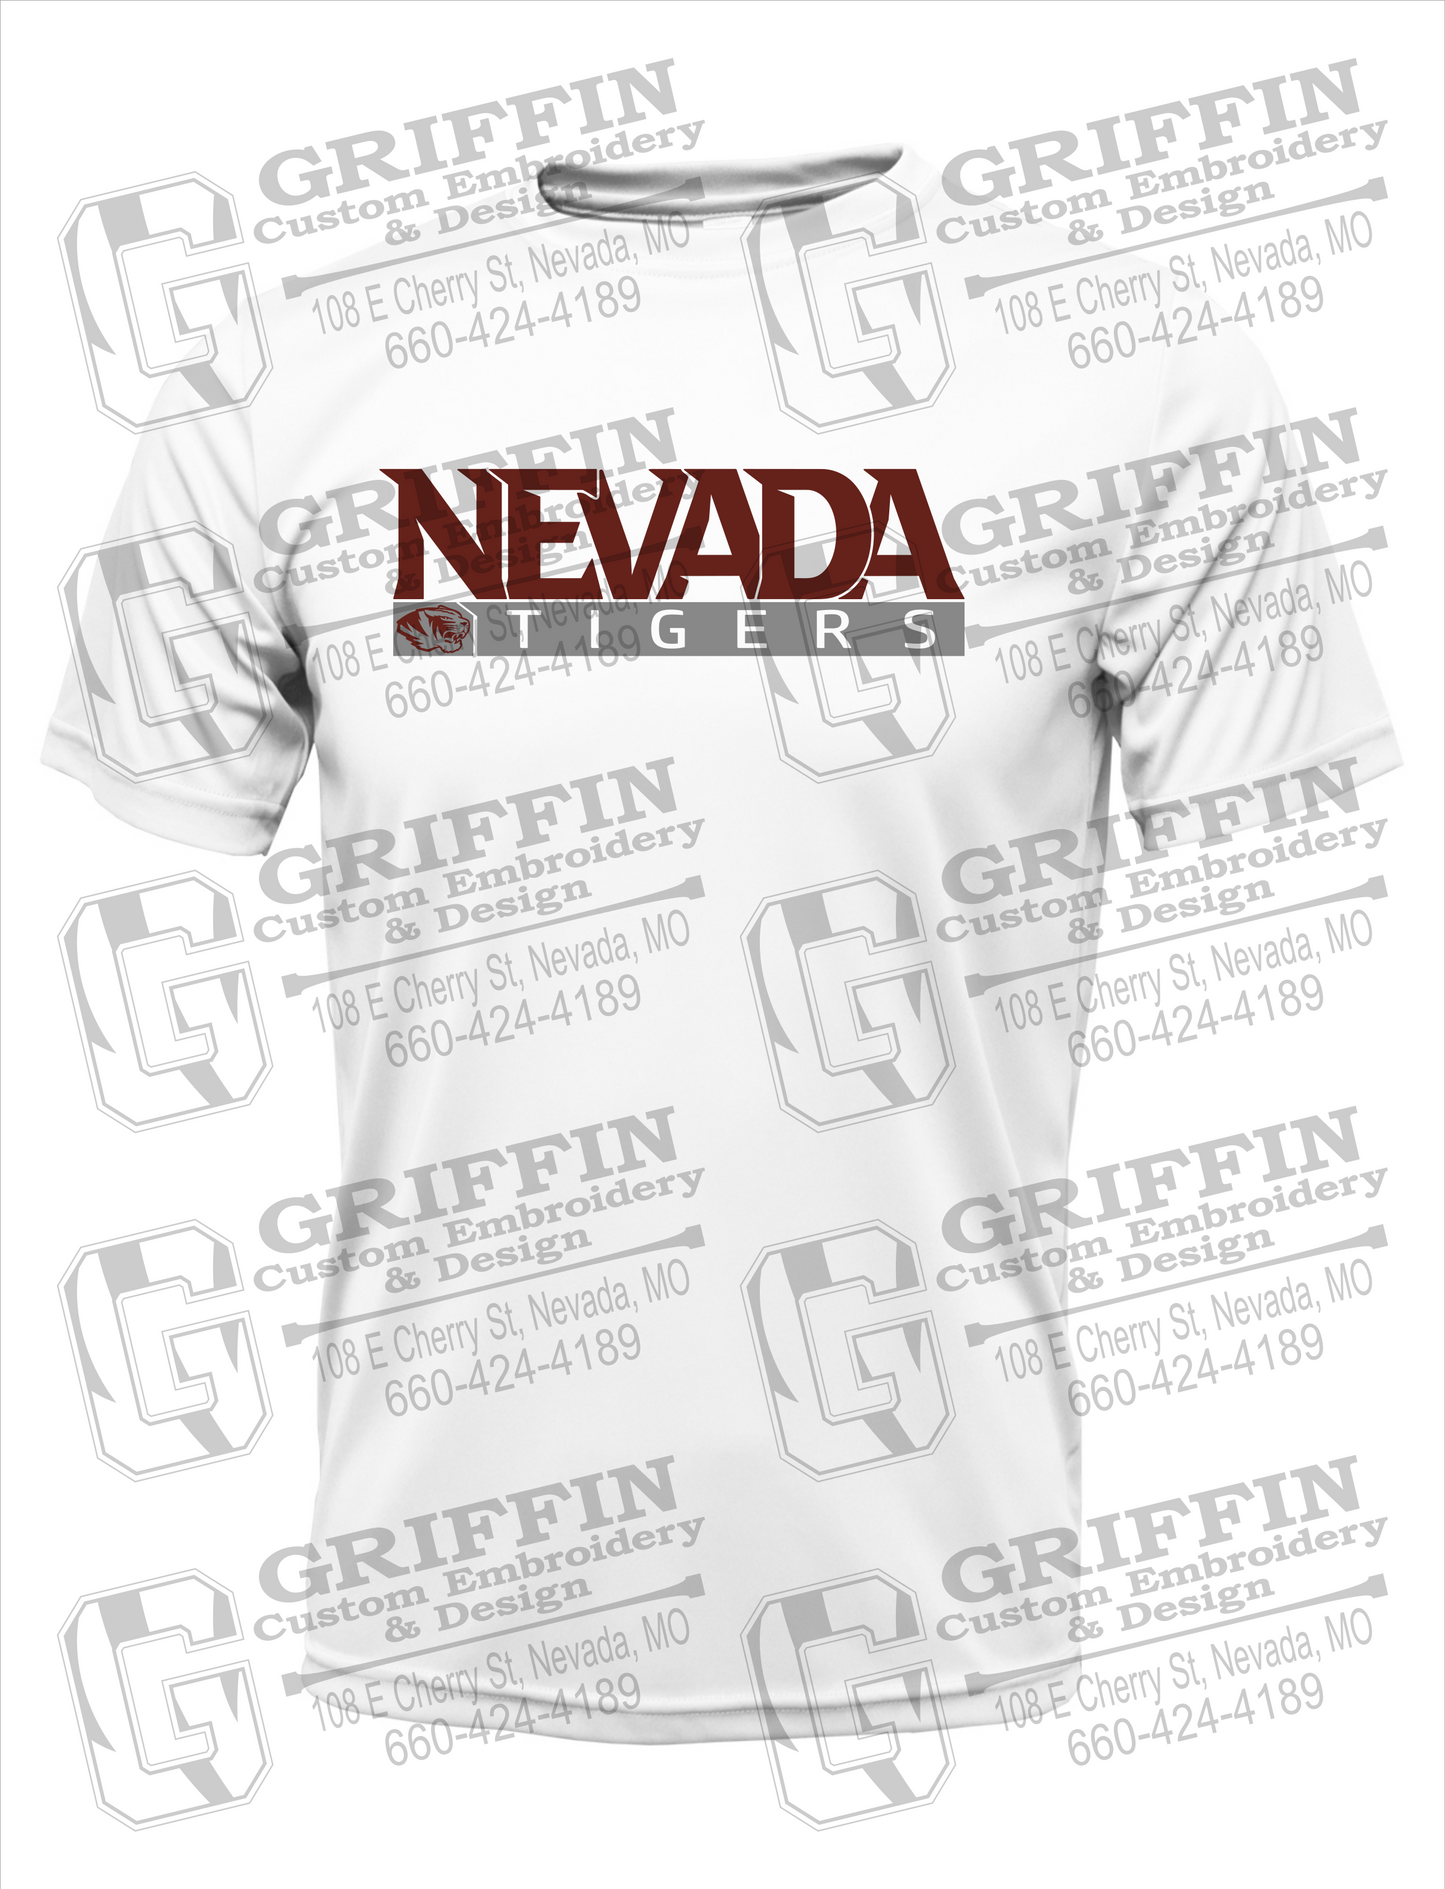 Nevada Tigers 22-G Dry-Fit T-Shirt